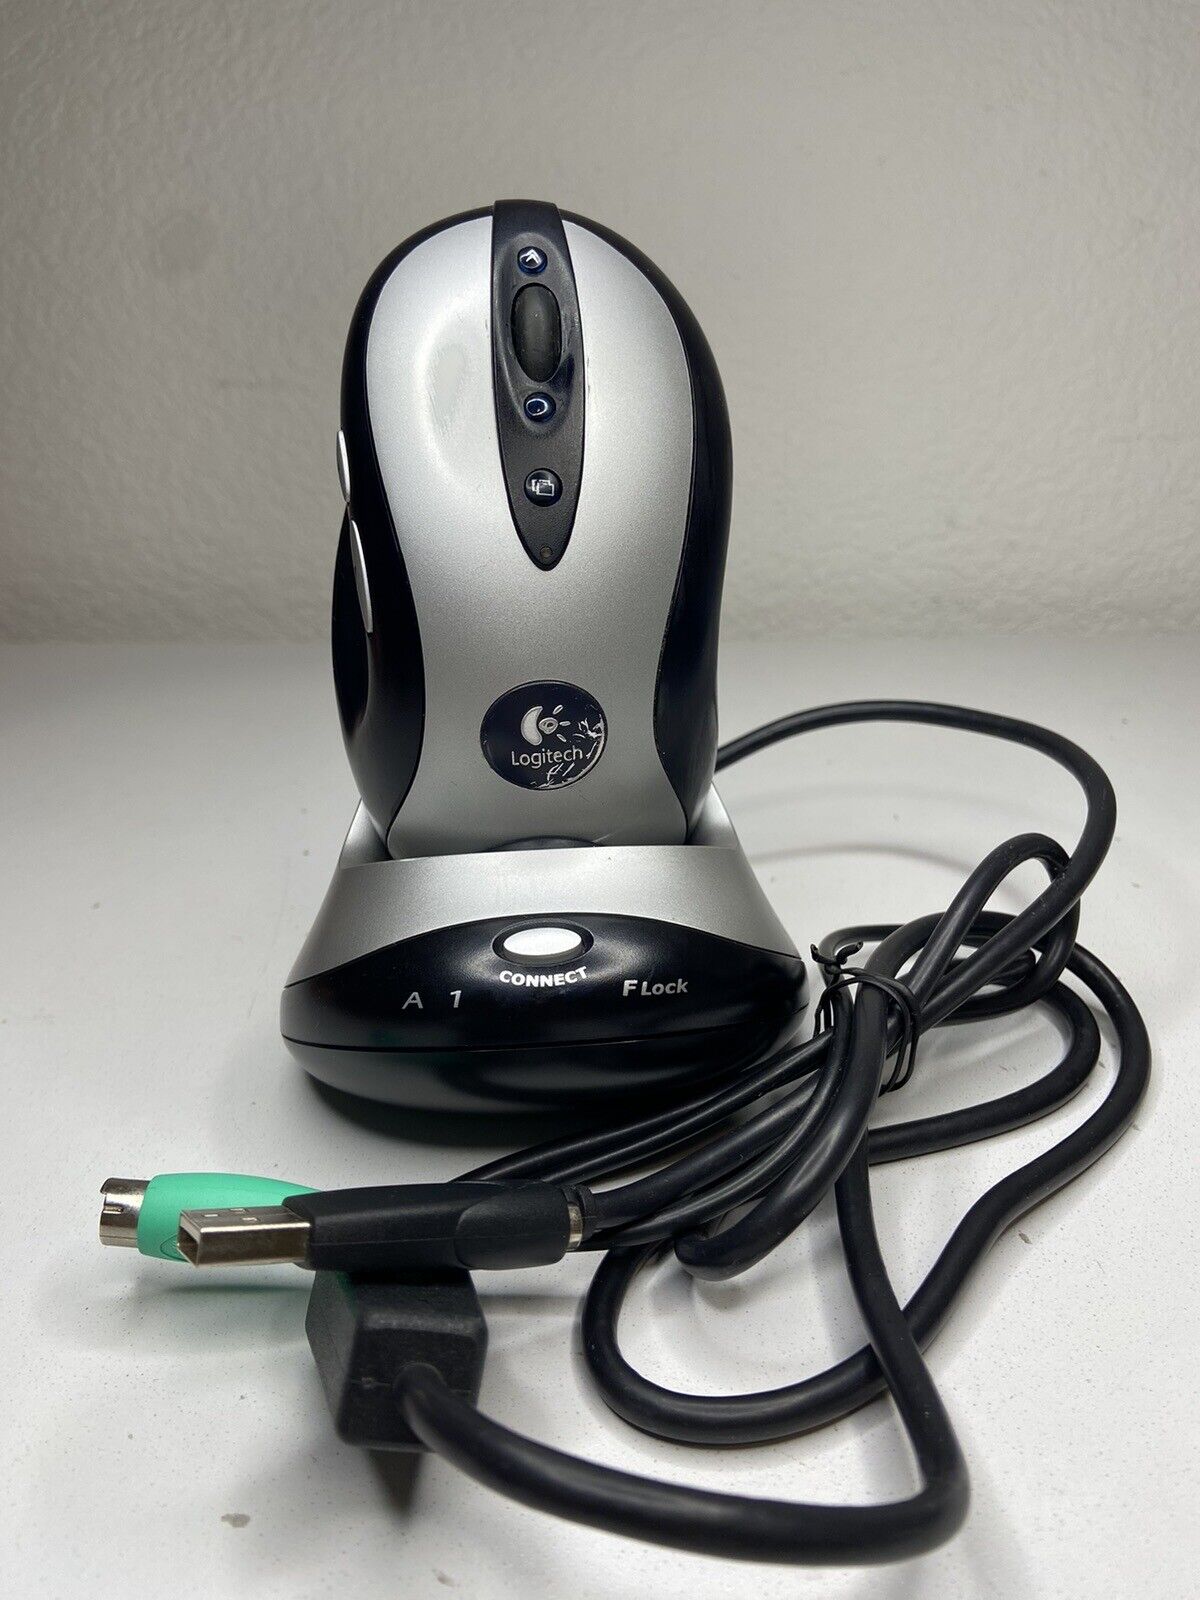 Vintage Logitech MX700 Cordless Optical Mouse with Docking Station  